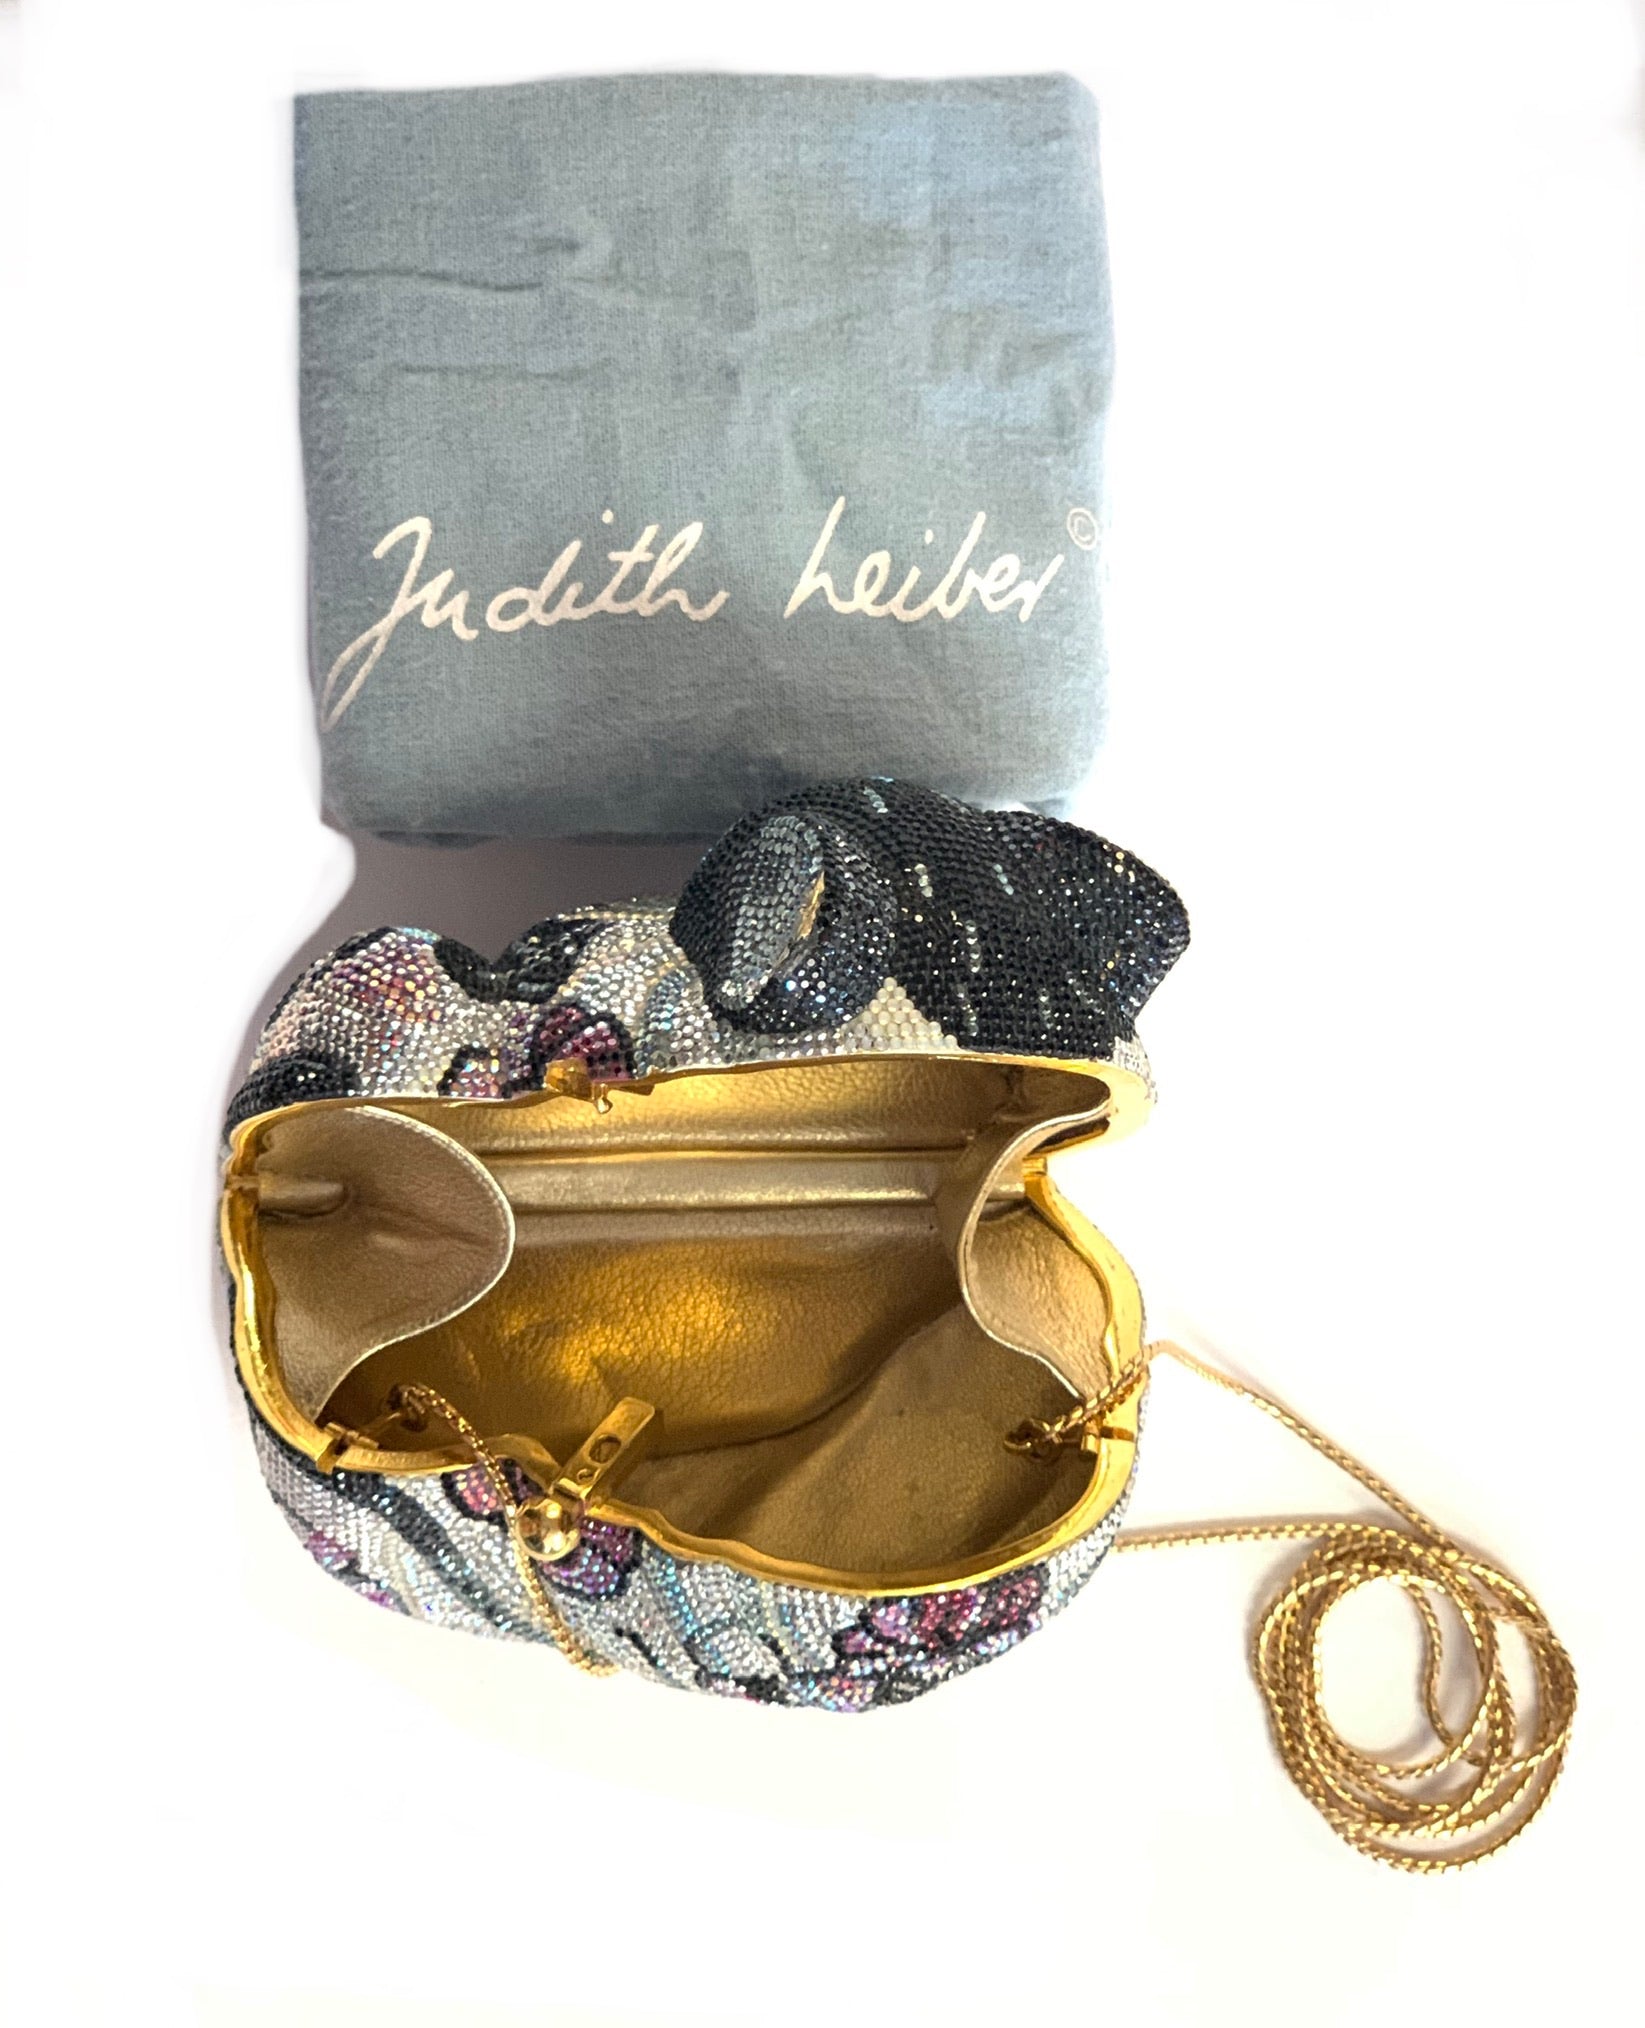 Made Design Judith Leiber Inspired Handmade Stack Of Cash Money Roll  Embellished Purse Swarovski Crystals Clutch